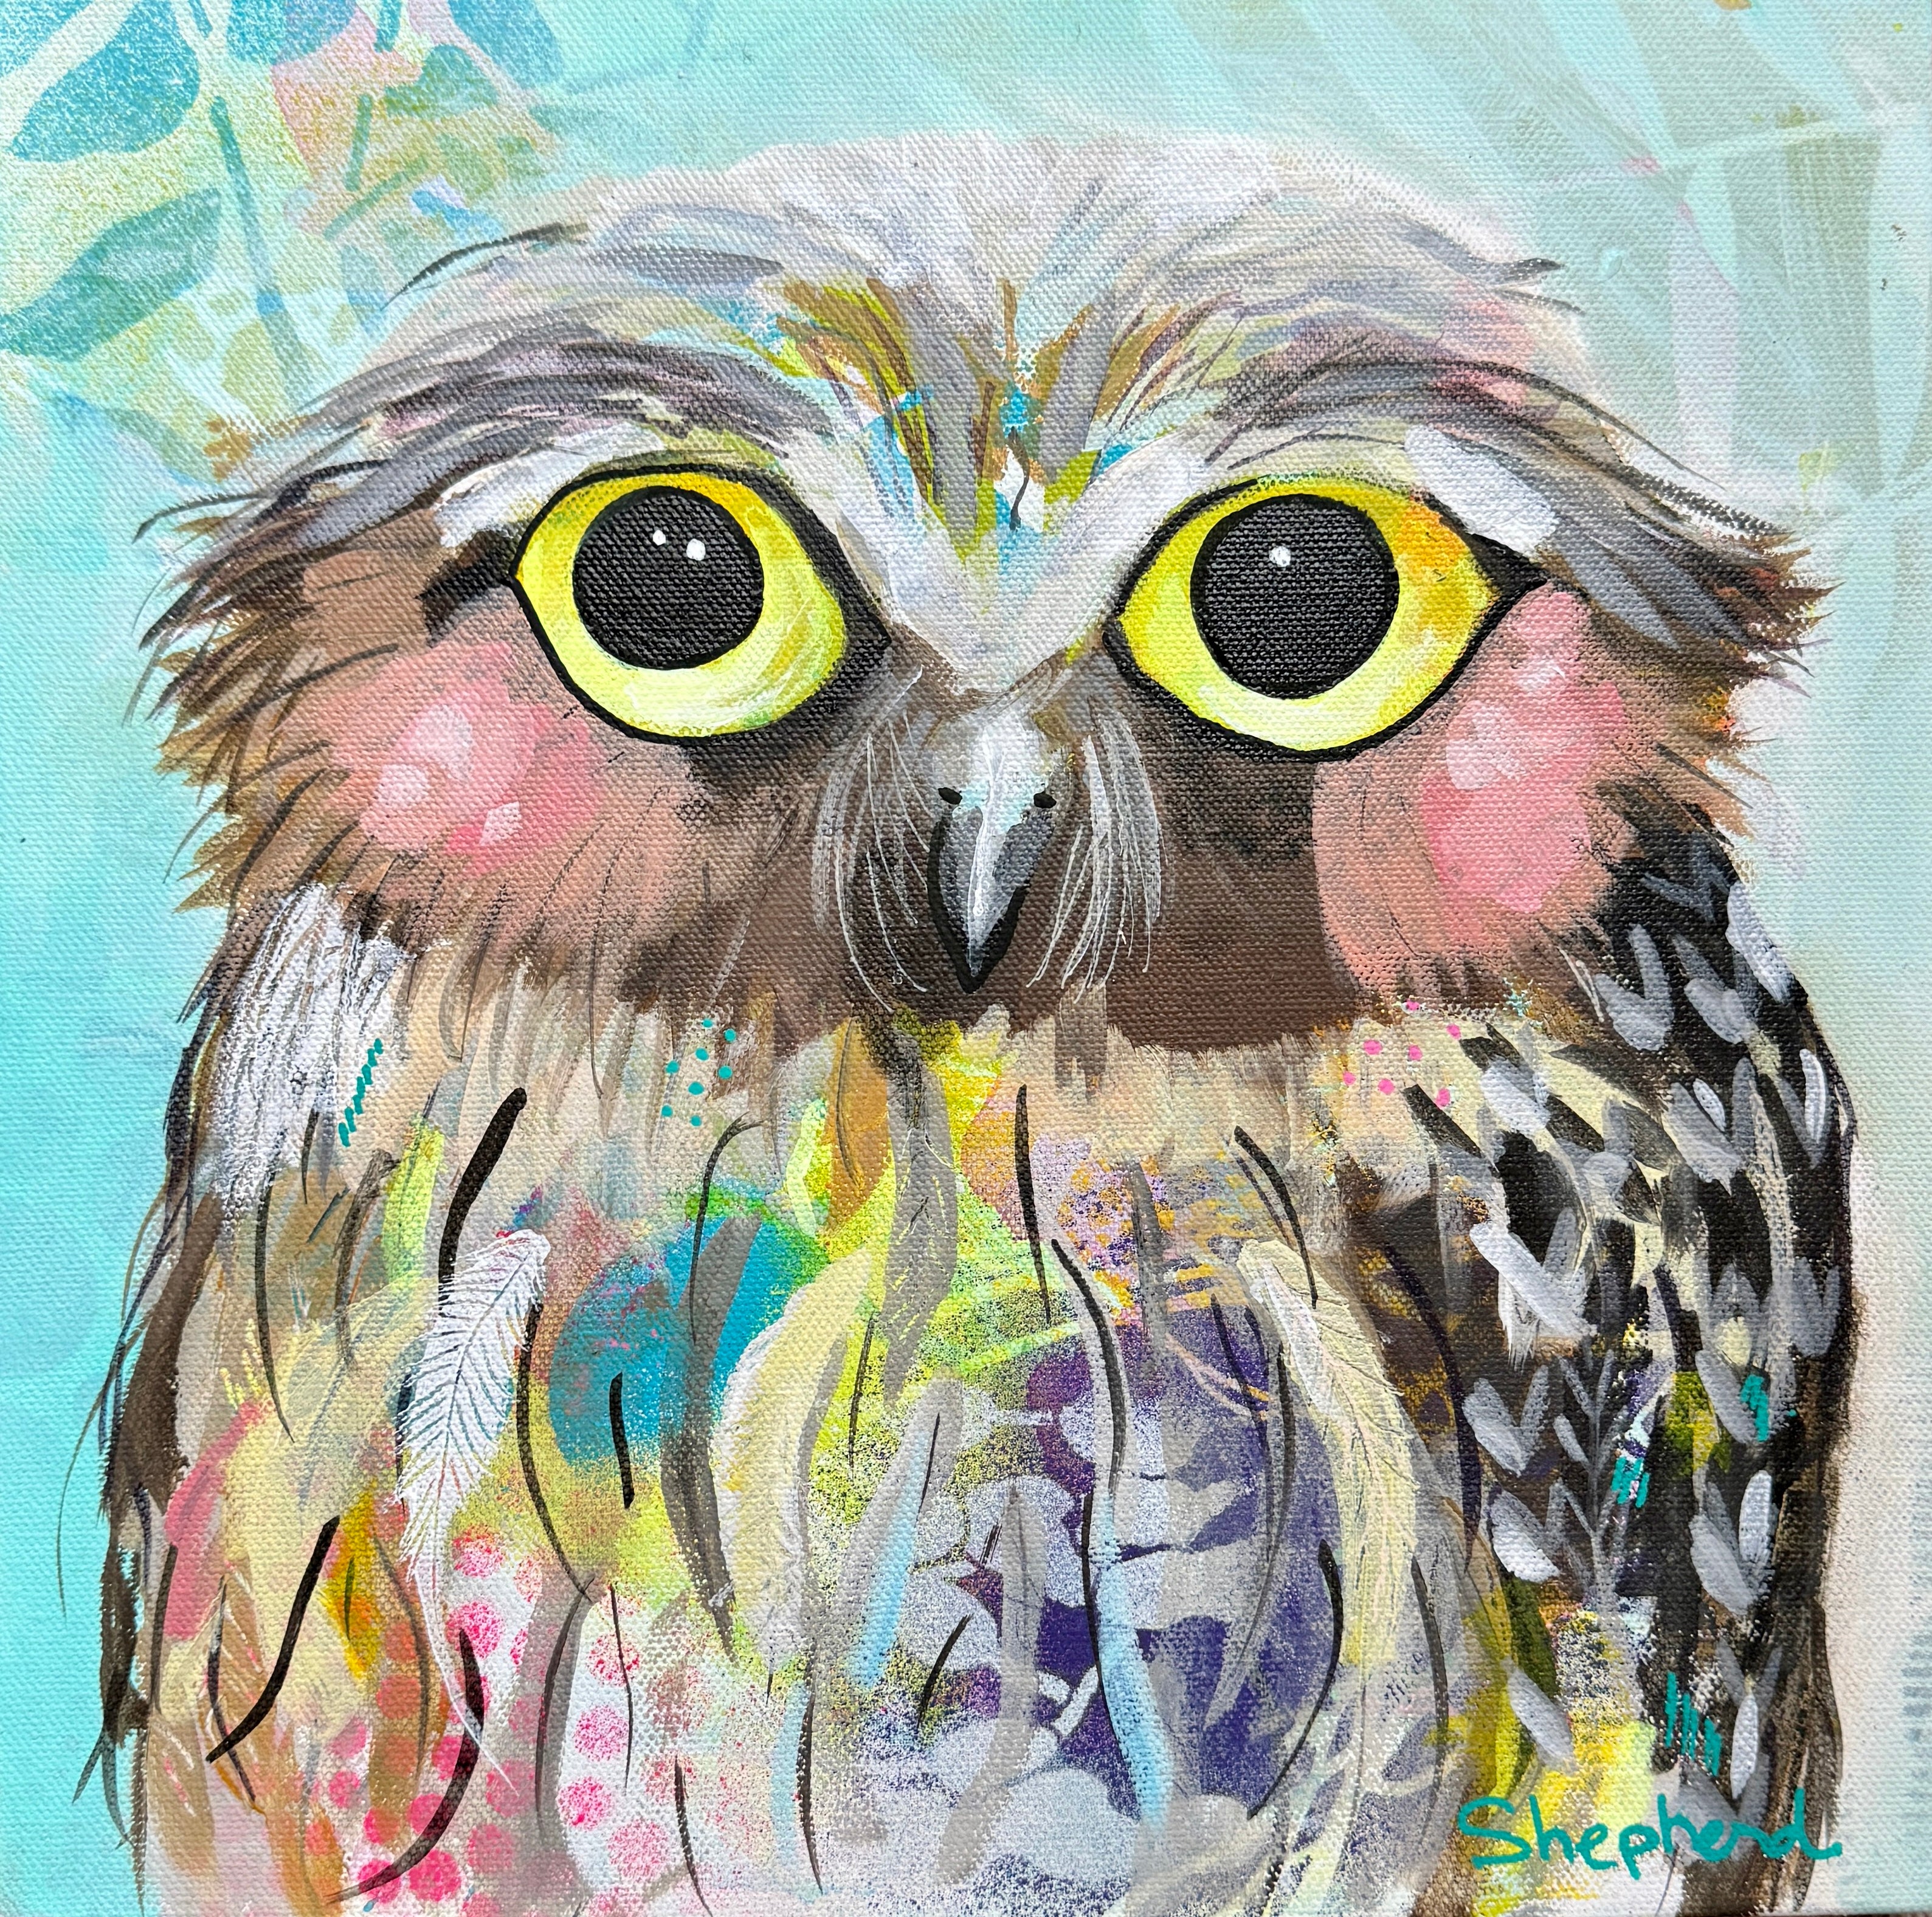 Grumpy Wet Owls: Jenny (Original Painting)